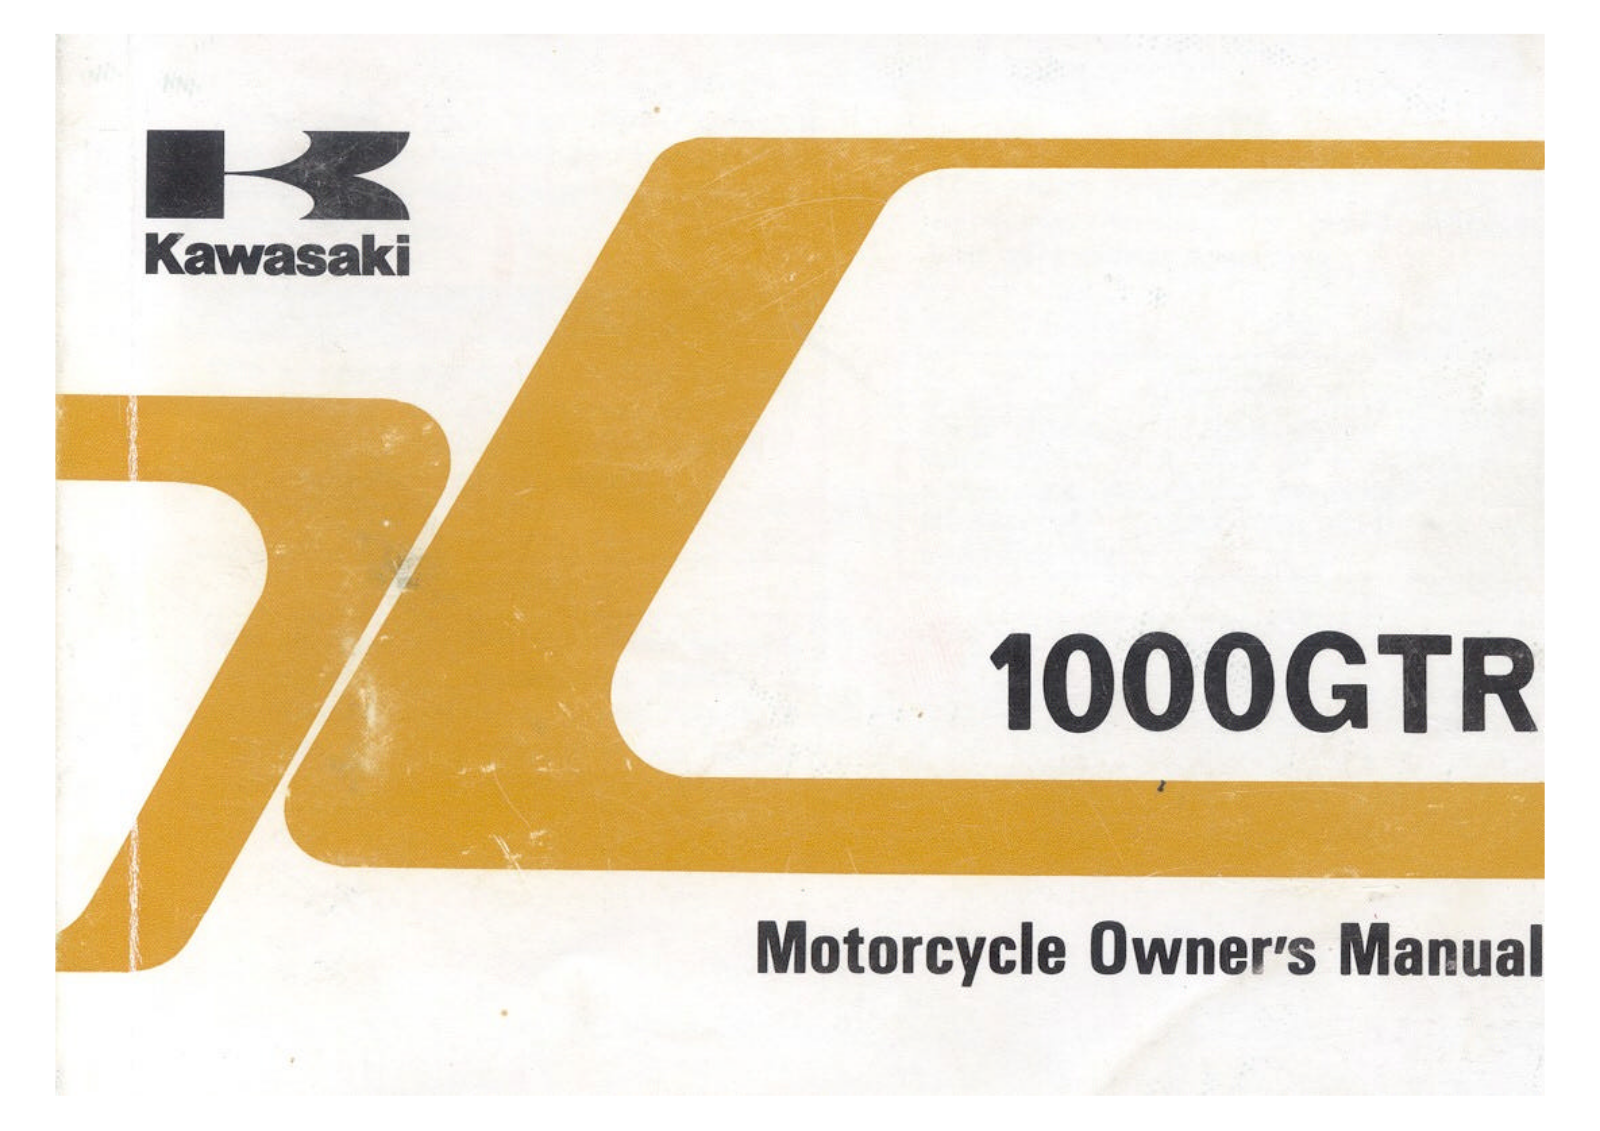 Kawasaki 1000GTR User Manual